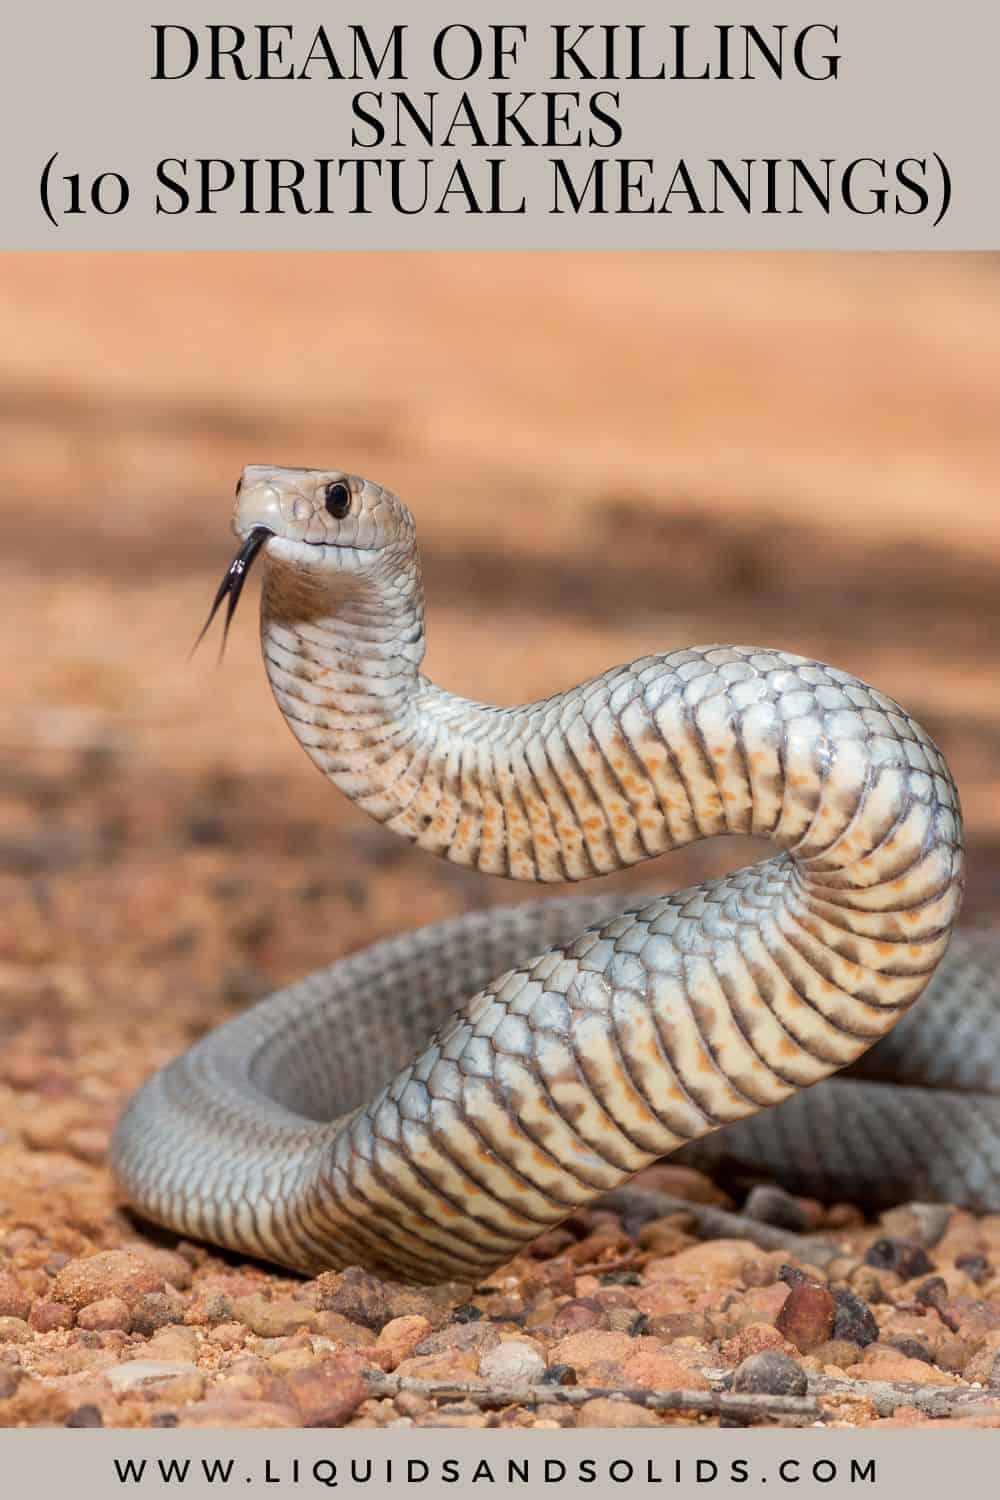  Rêver de tuer des serpents (10 significations spirituelles)